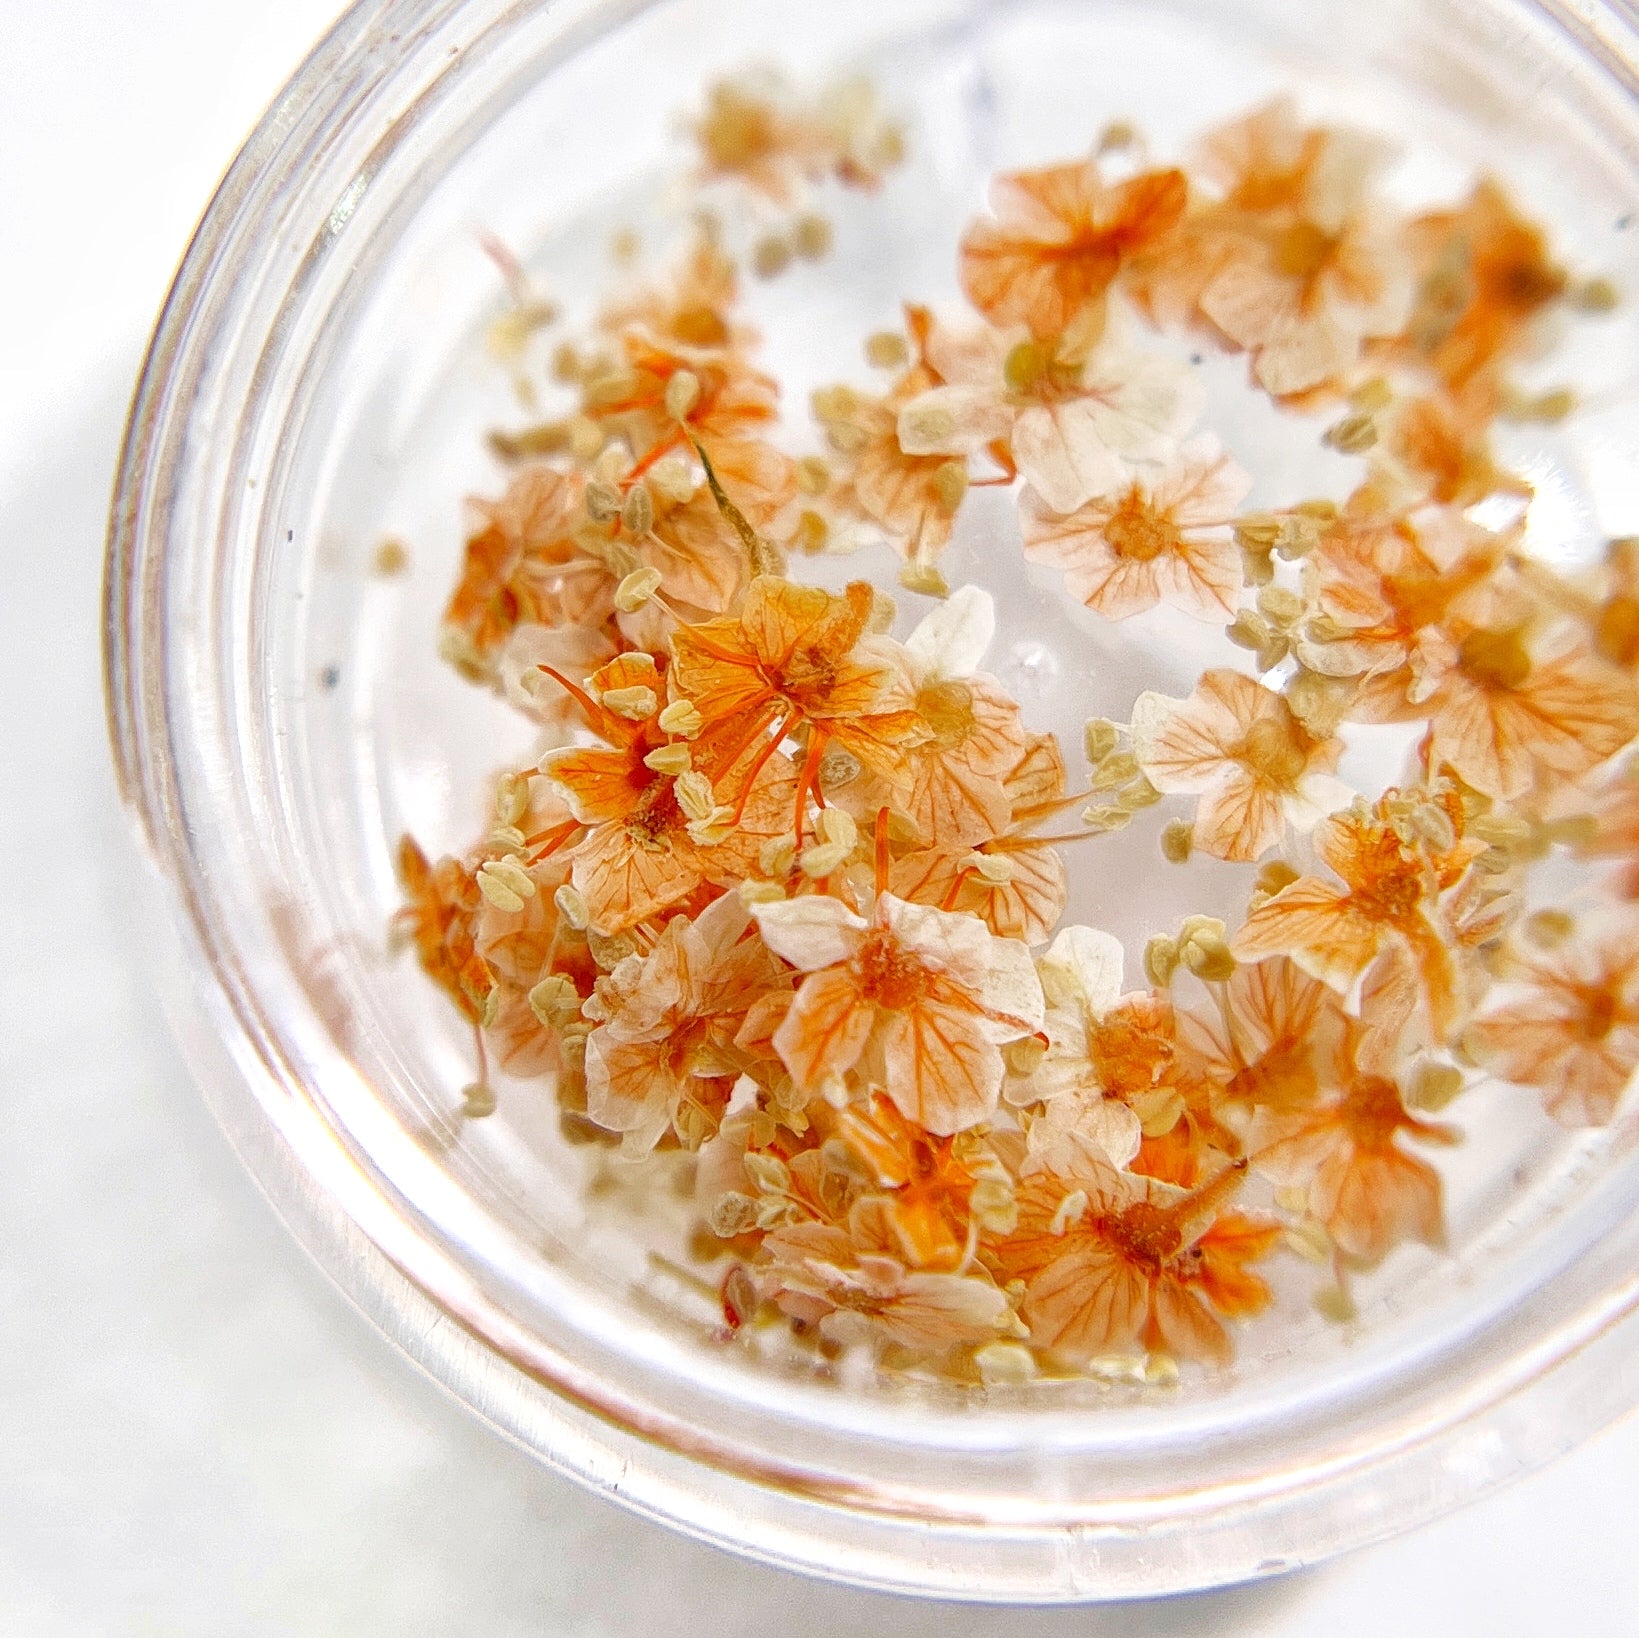 Petite Bloom in Apricot - Multi-Tonal Orange Pressed Flower Mix in Jar, Presented on White Background.